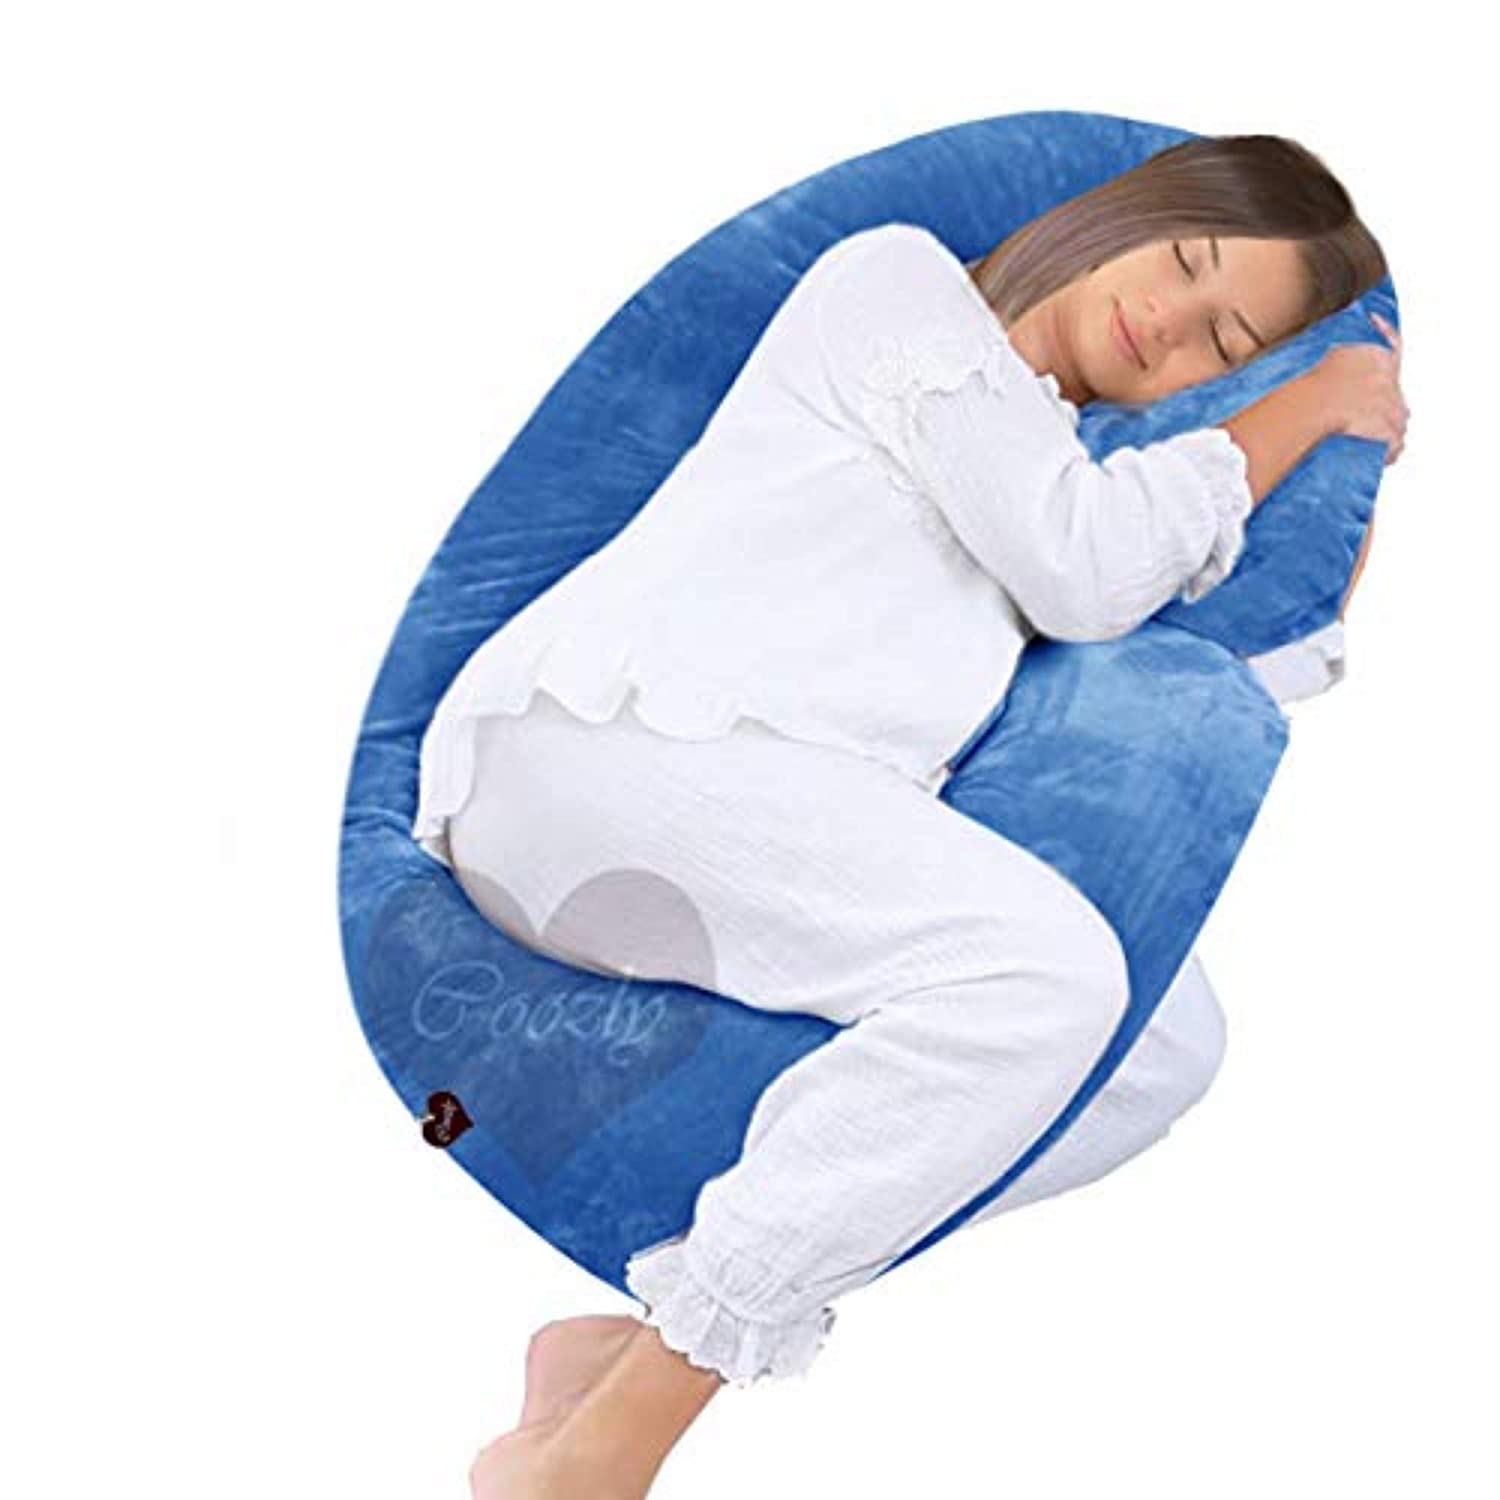 Blue Velvet - Coozly Alpha Basic Maternity Pillow | Pregnancy Pillow